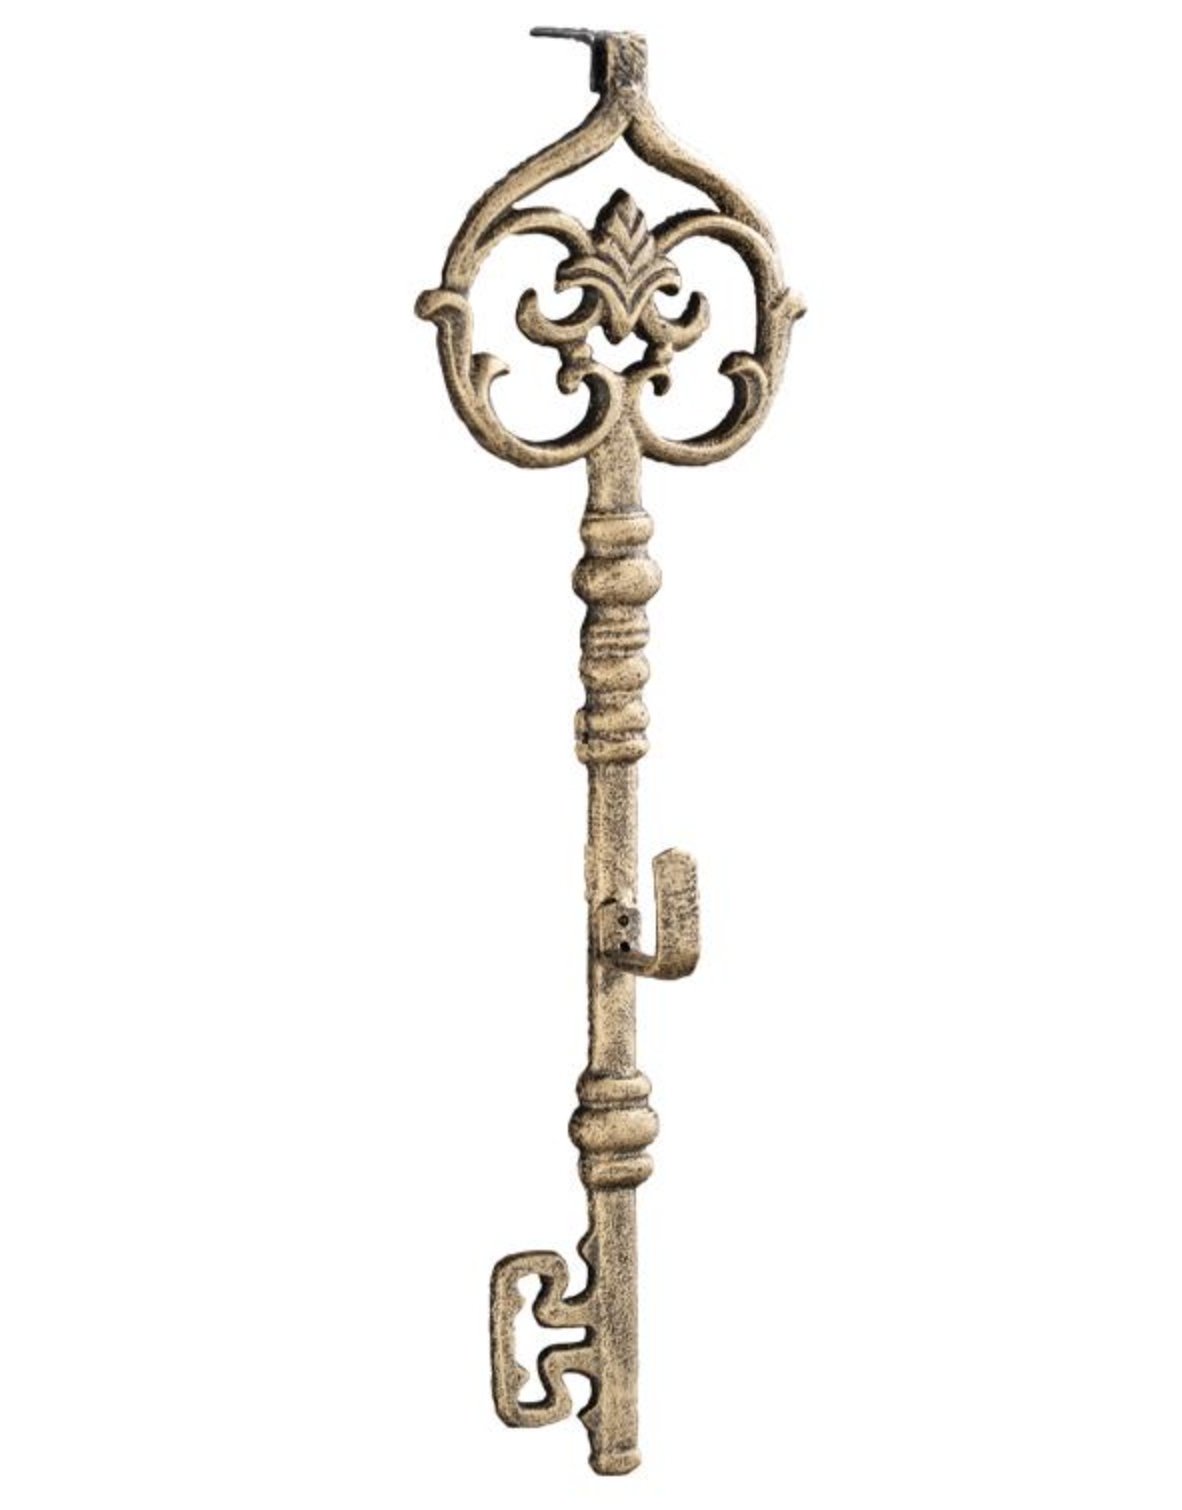 Aged Skeleton Key Wreath Hanger - Royalties